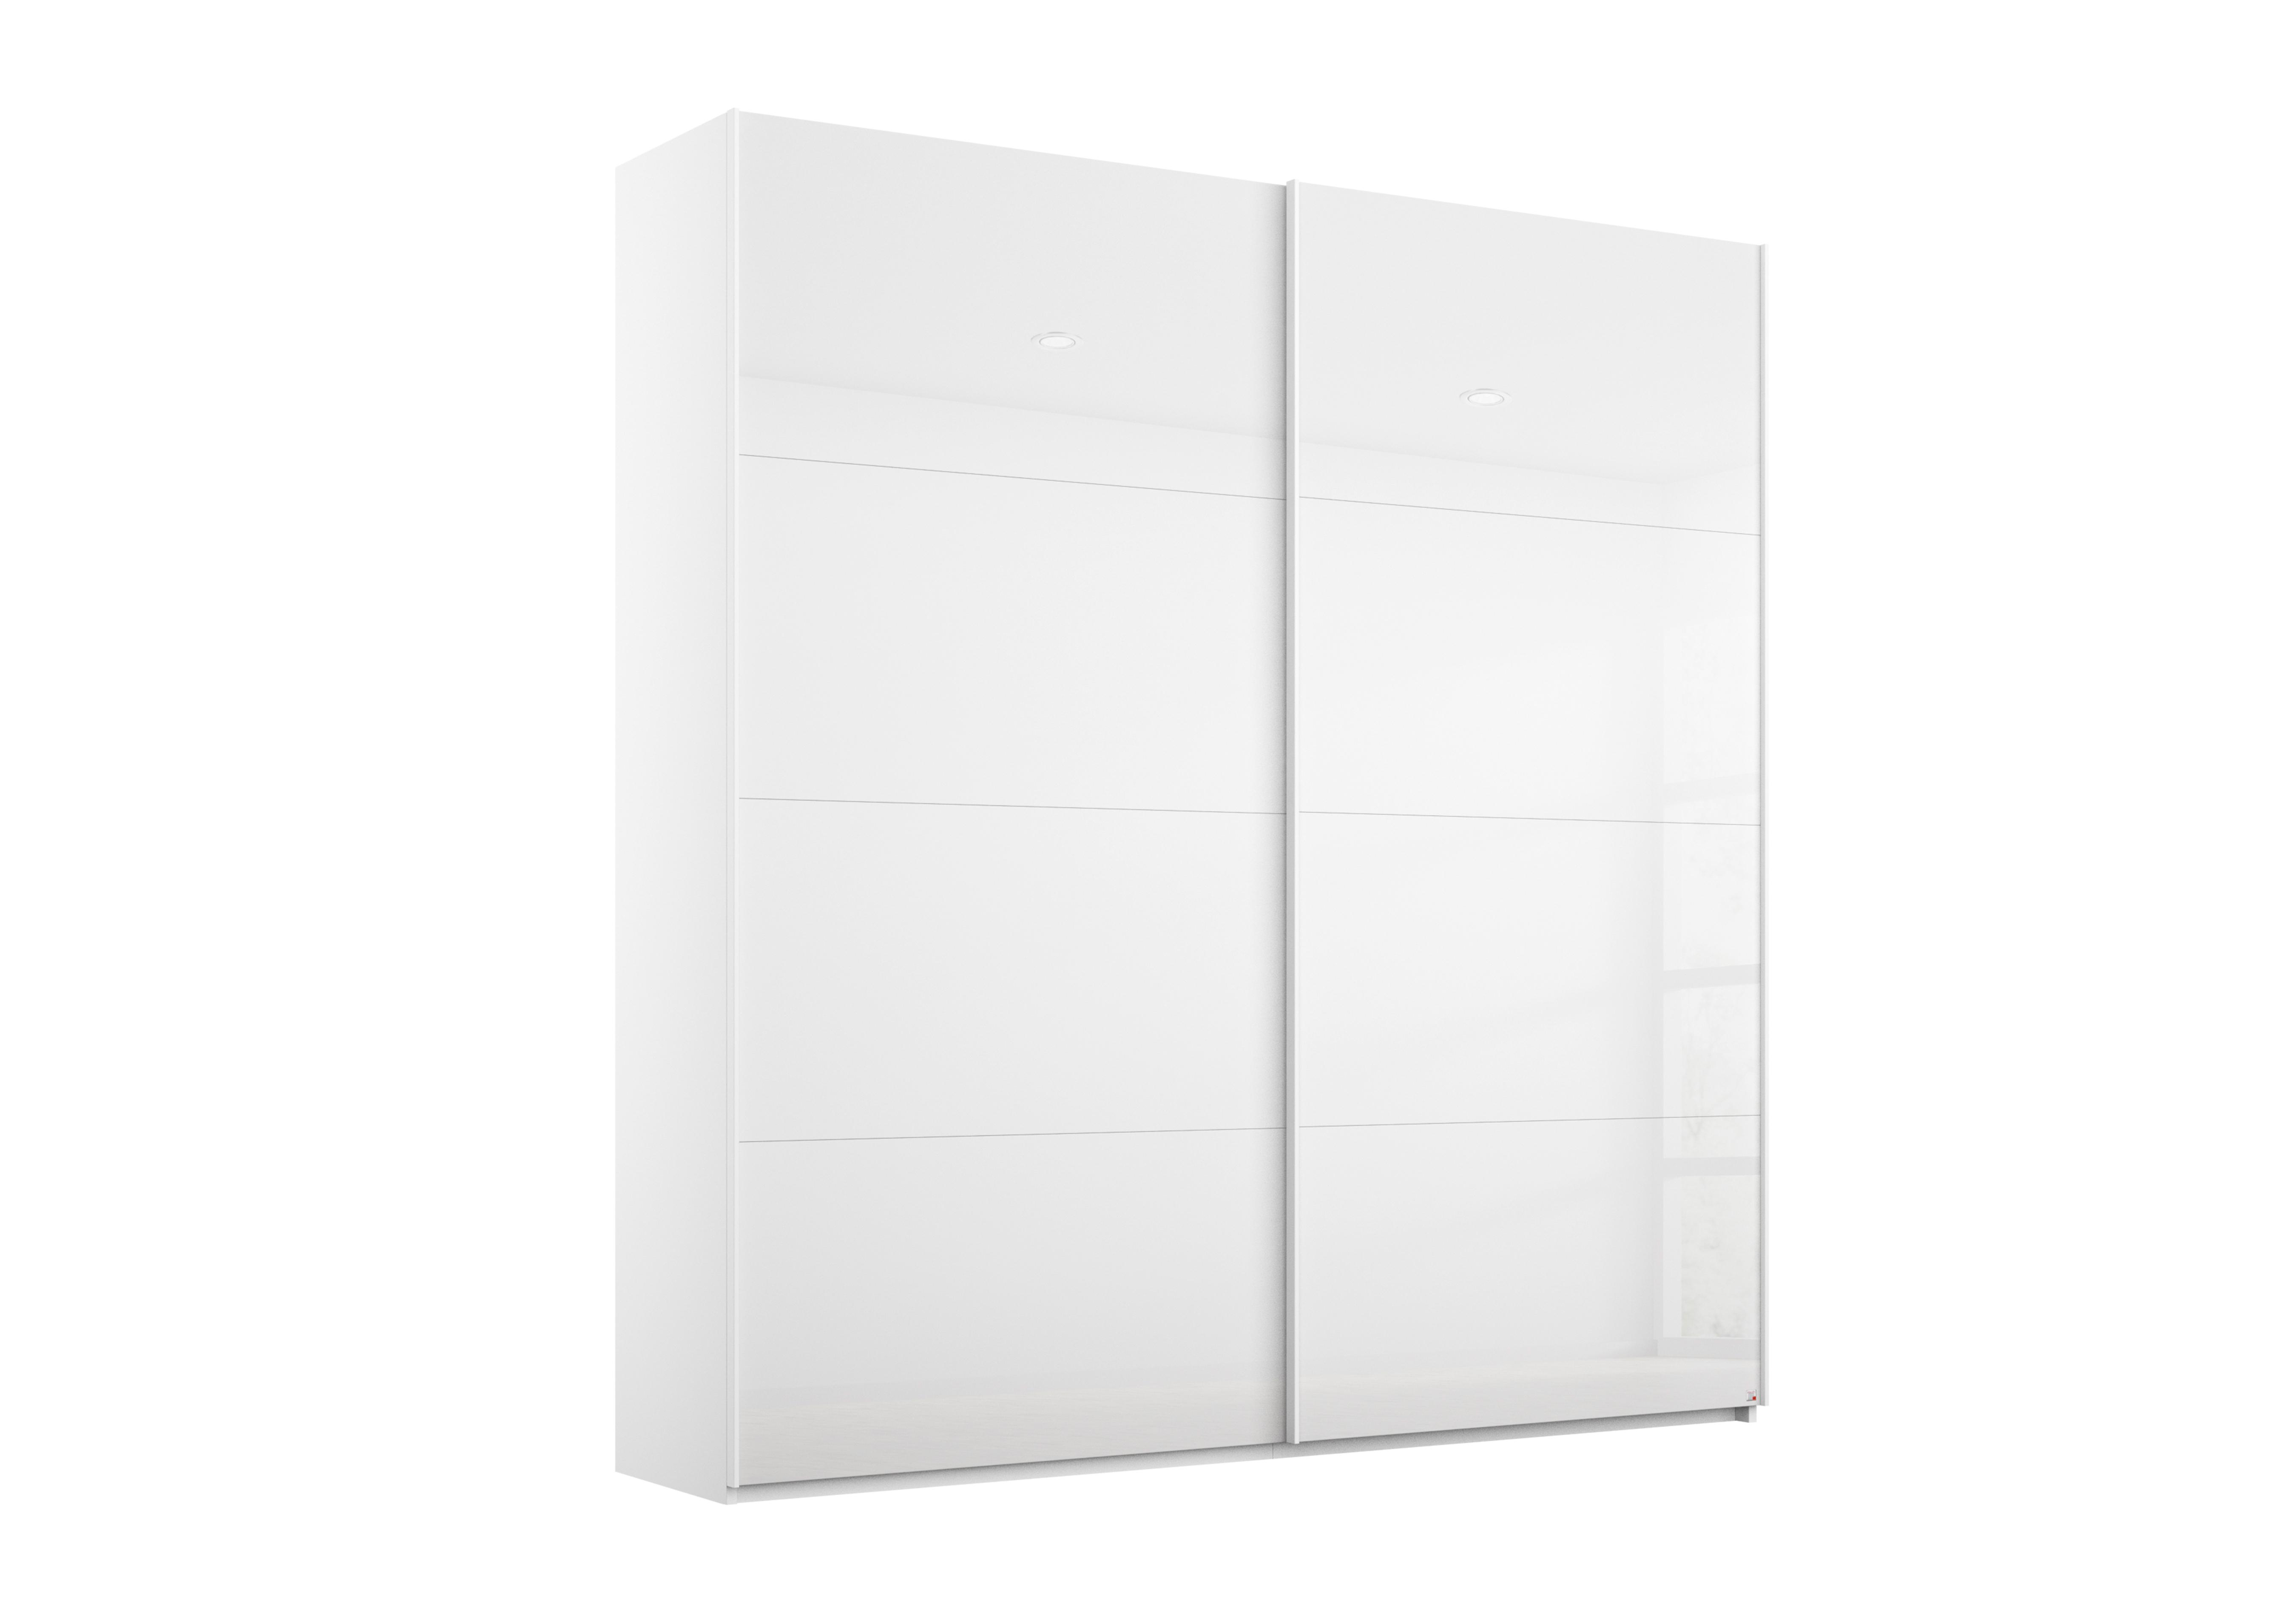 Formes Glass 2 Door Slider Wardrobe in A131b White White Front on Furniture Village